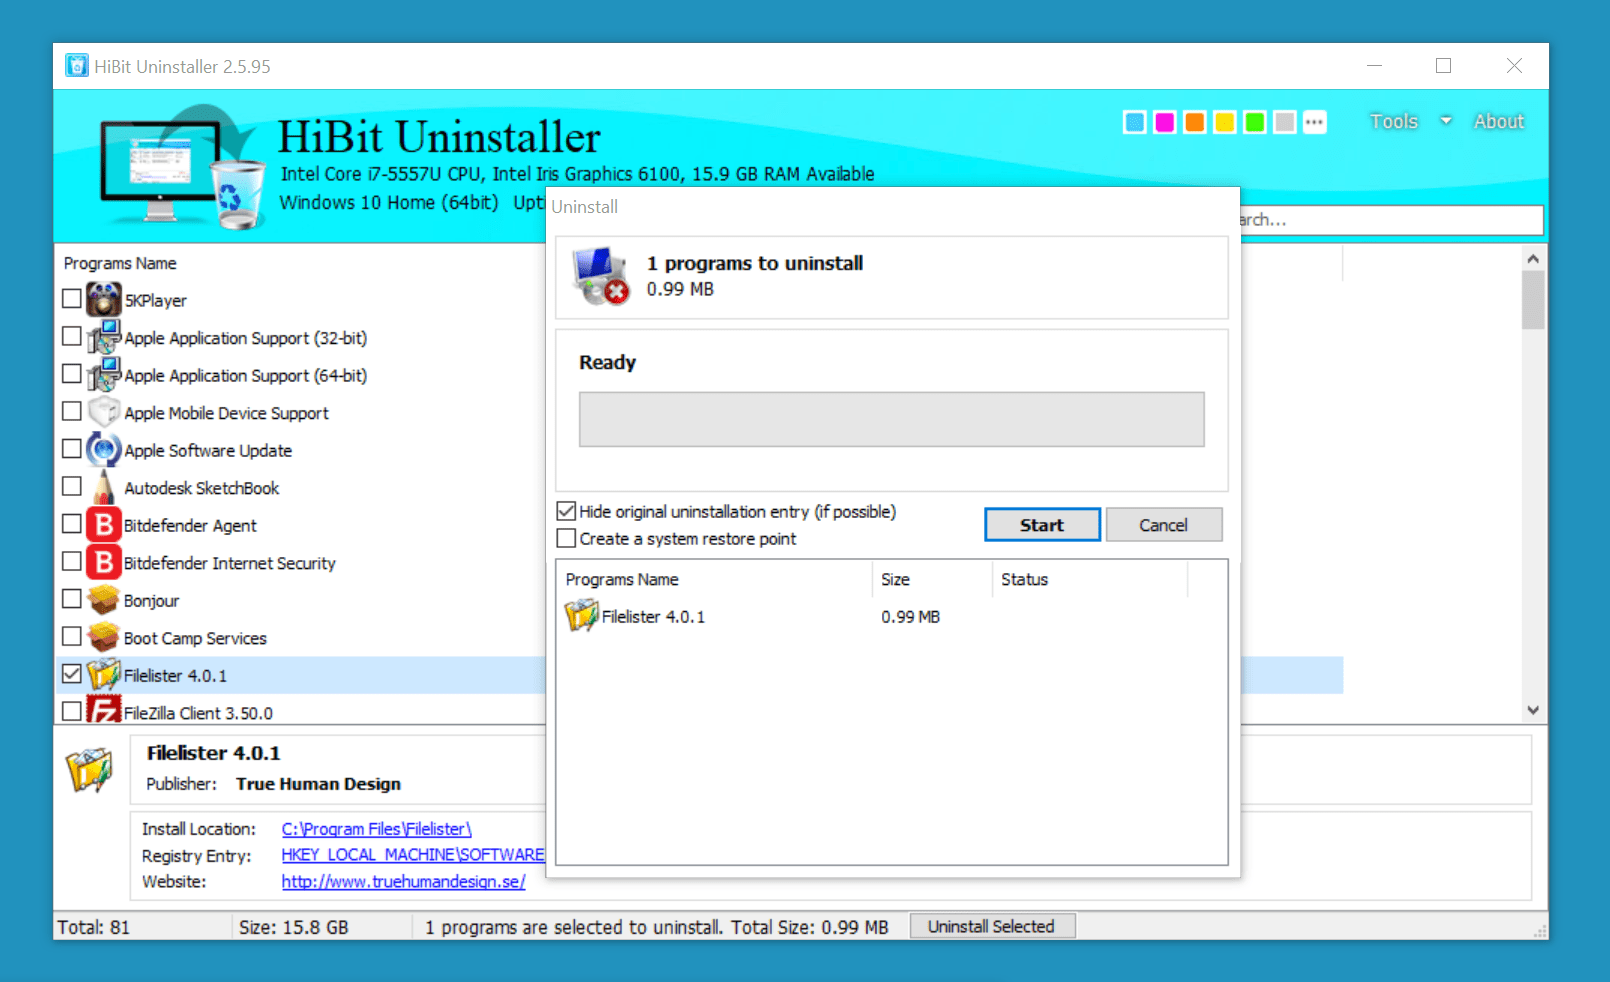 HiBit Uninstaller 3.1.62 download the new version for windows